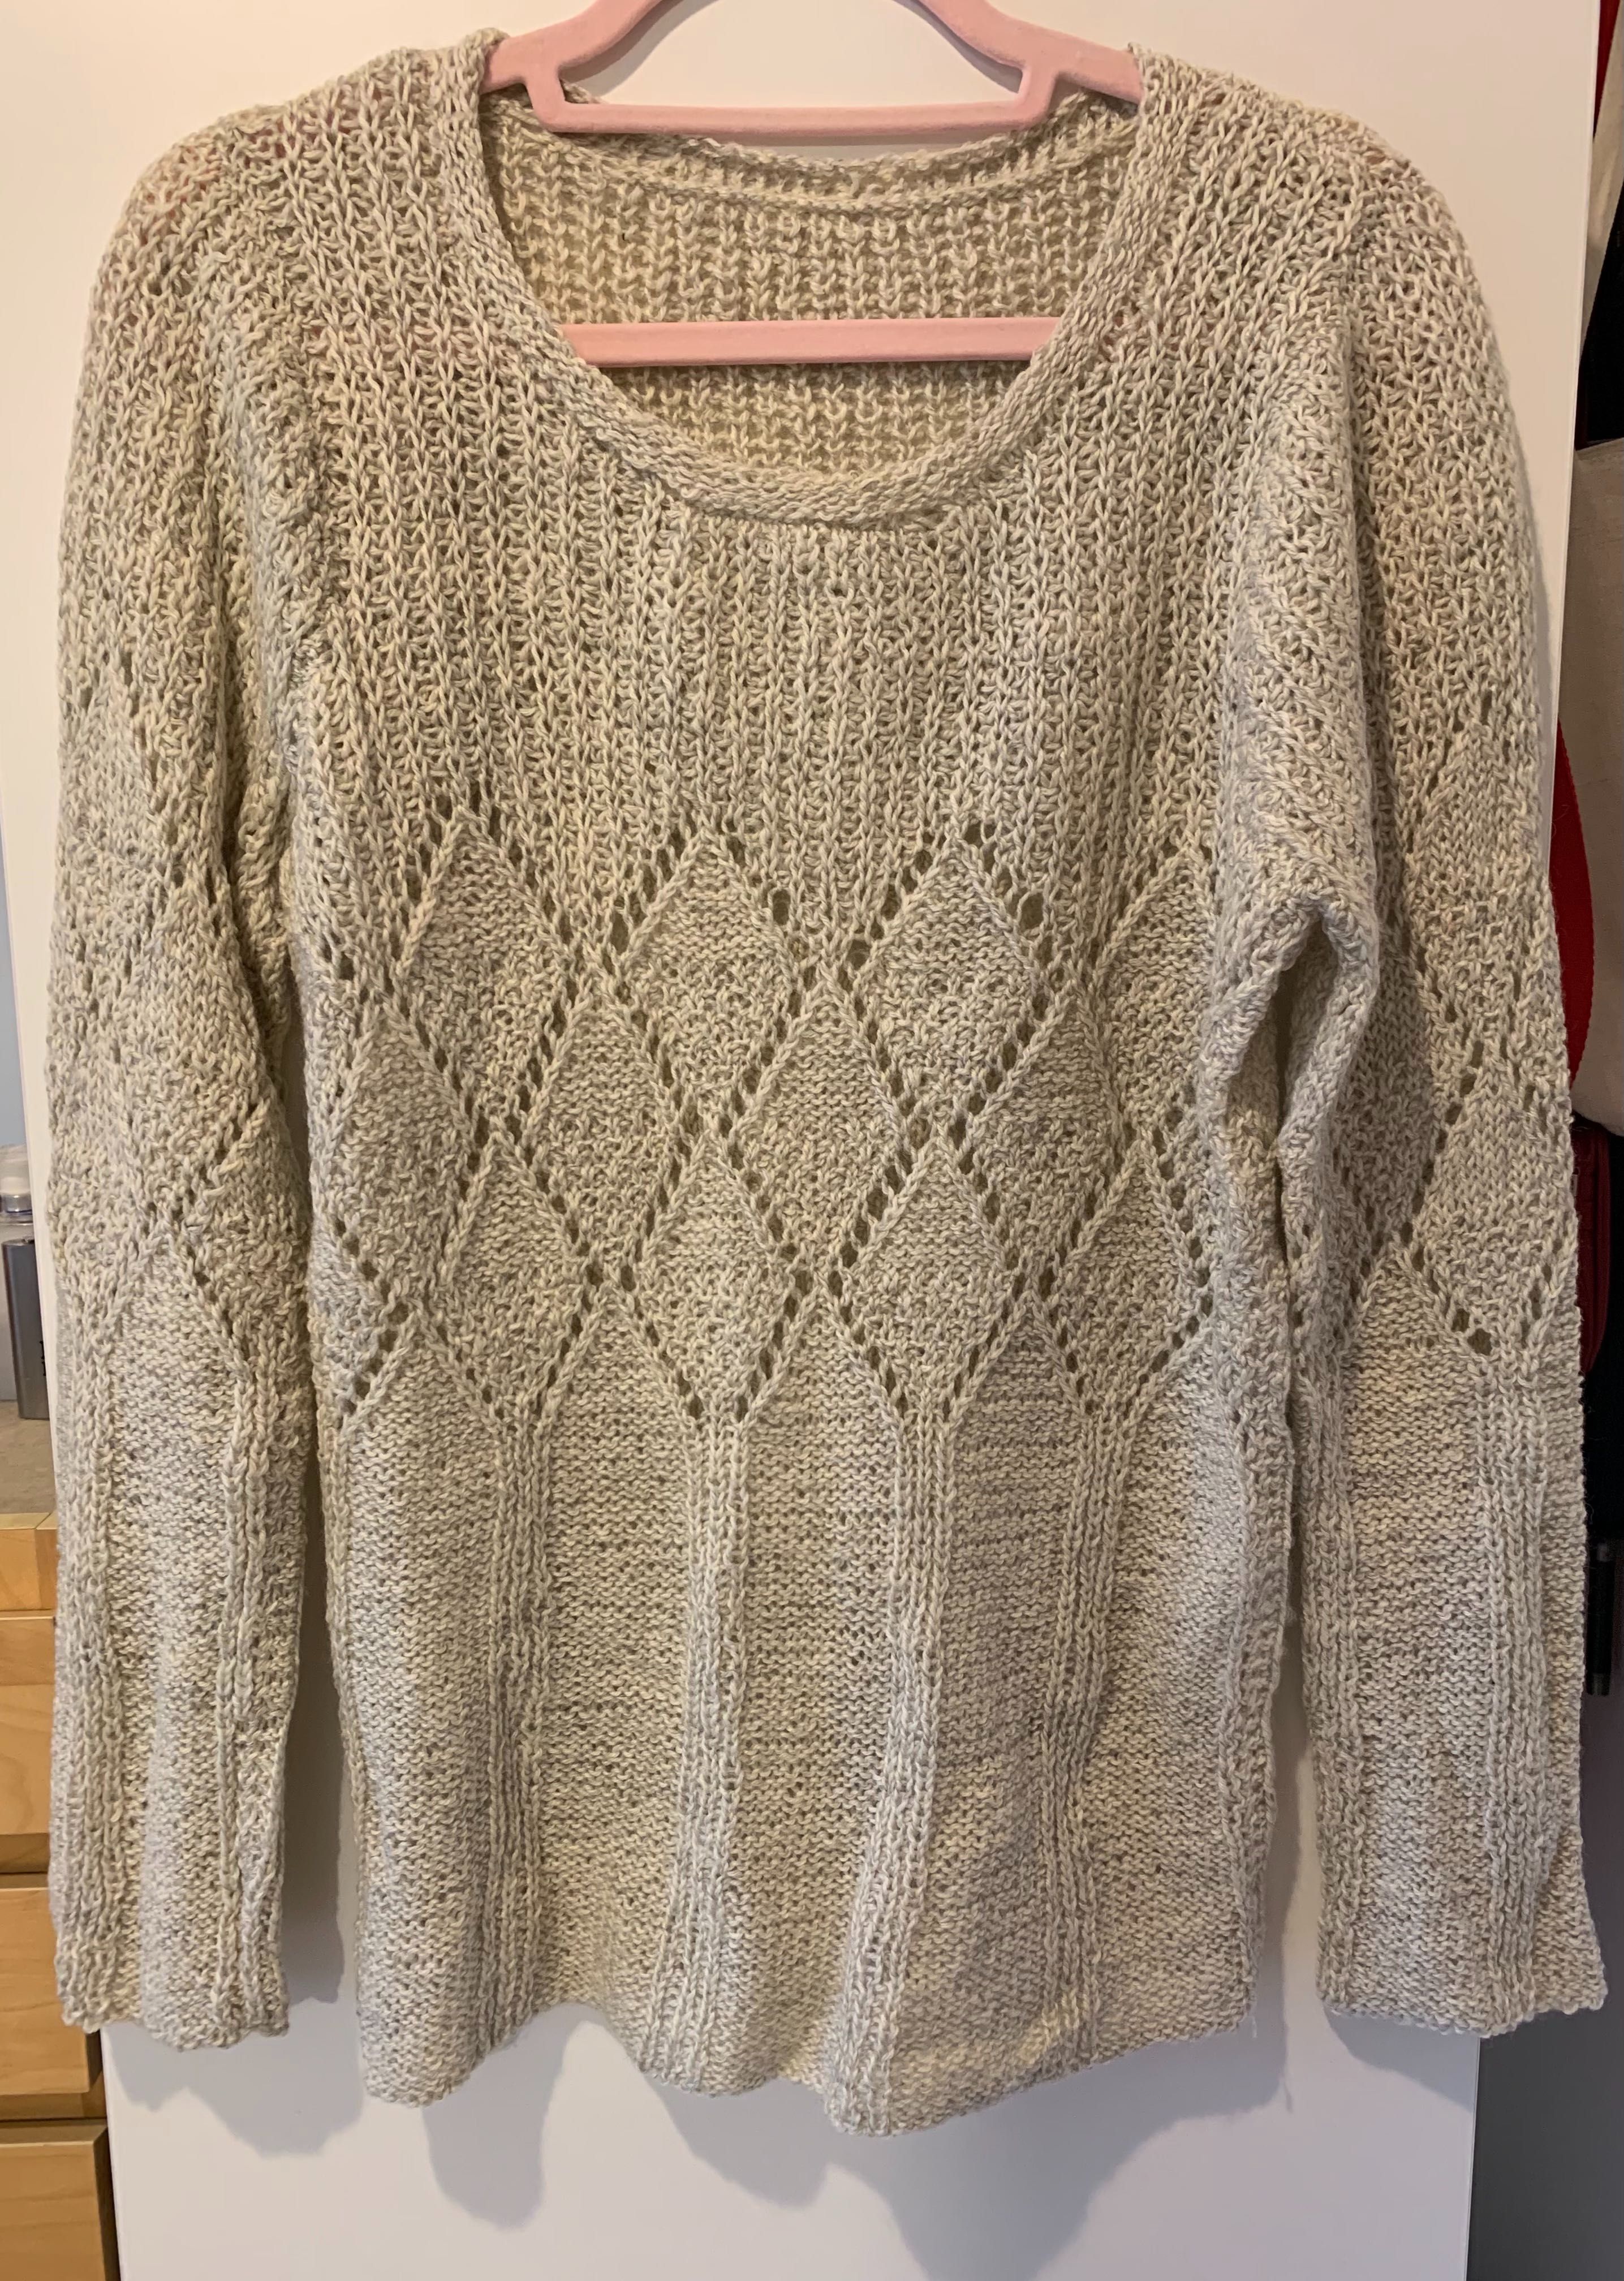 Sweterek handmade ~M